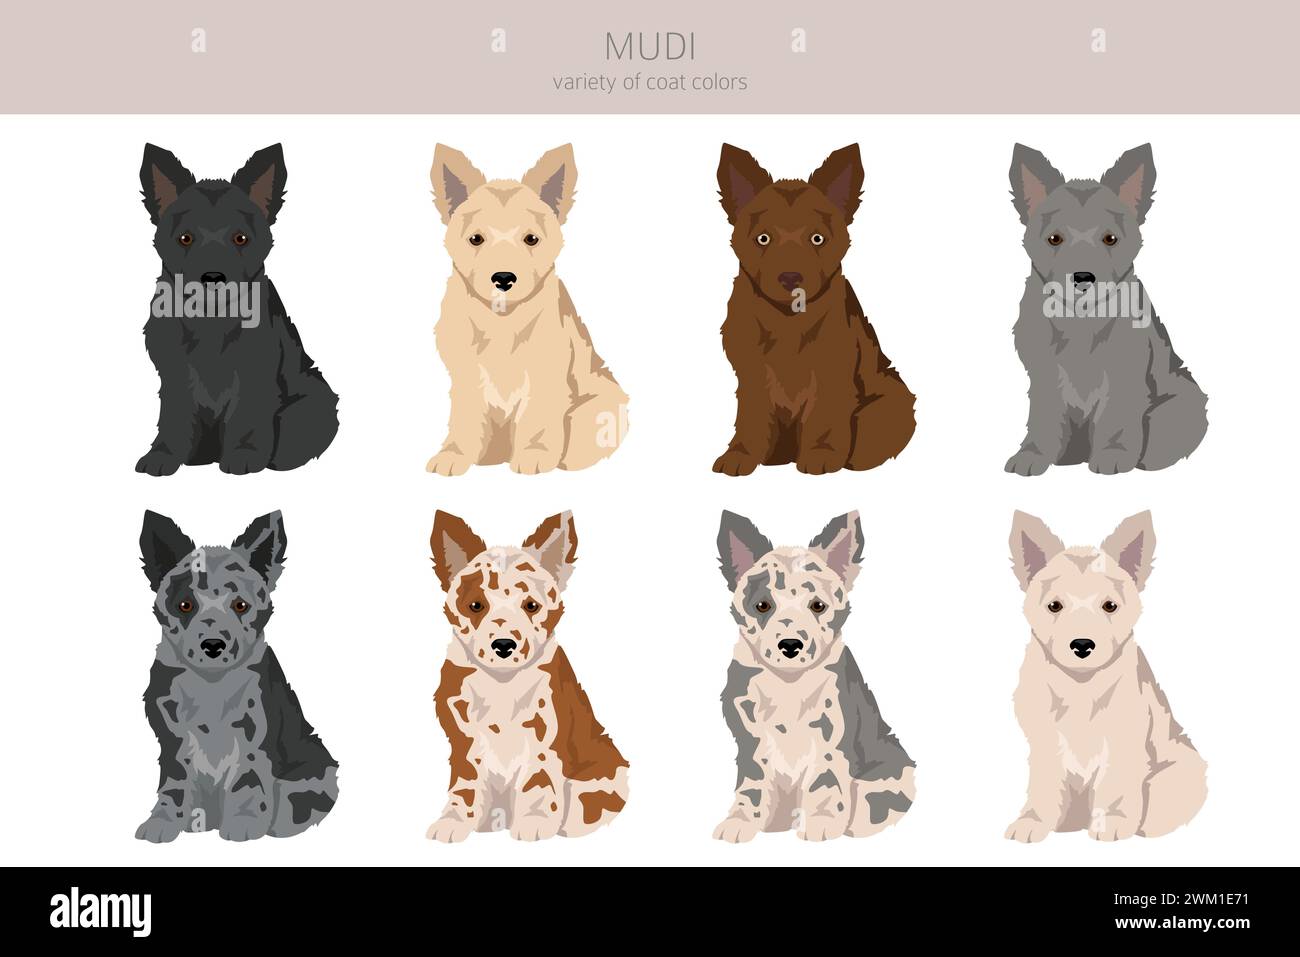 Mudi puppy clipart. Different poses, coat colors set.  Vector illustration Stock Vector